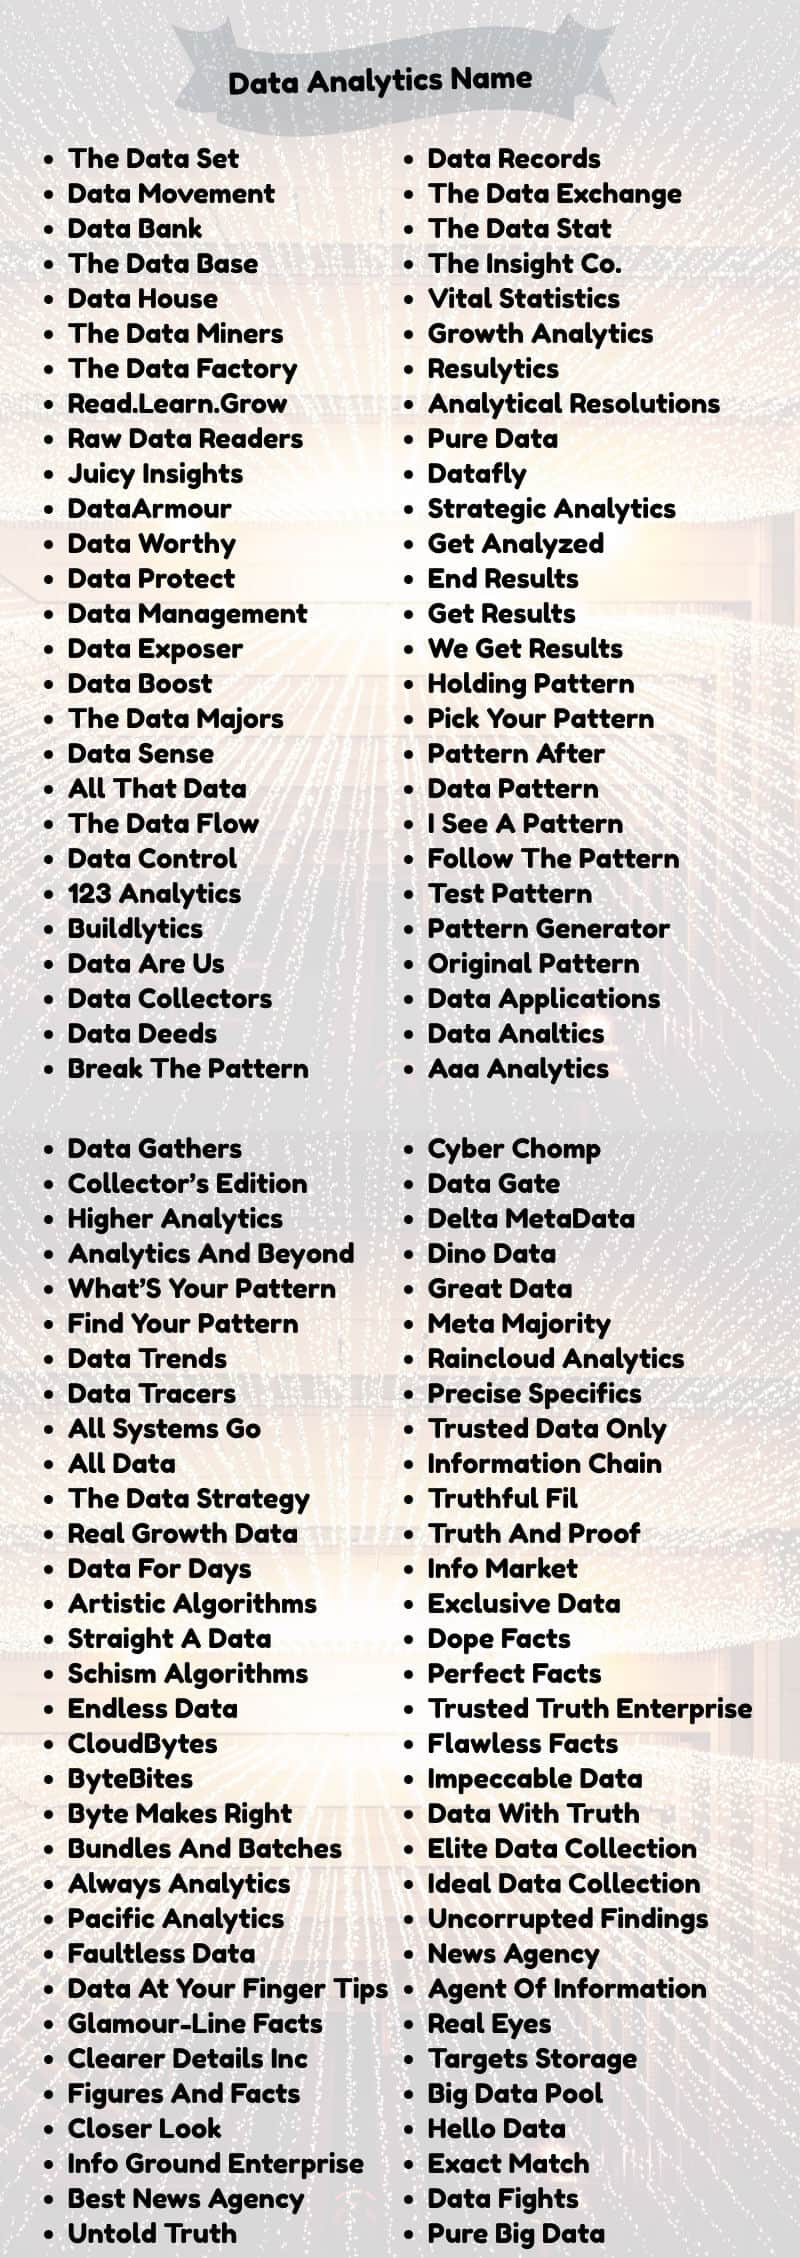 Data Analytics Team Names: List of ideas for names